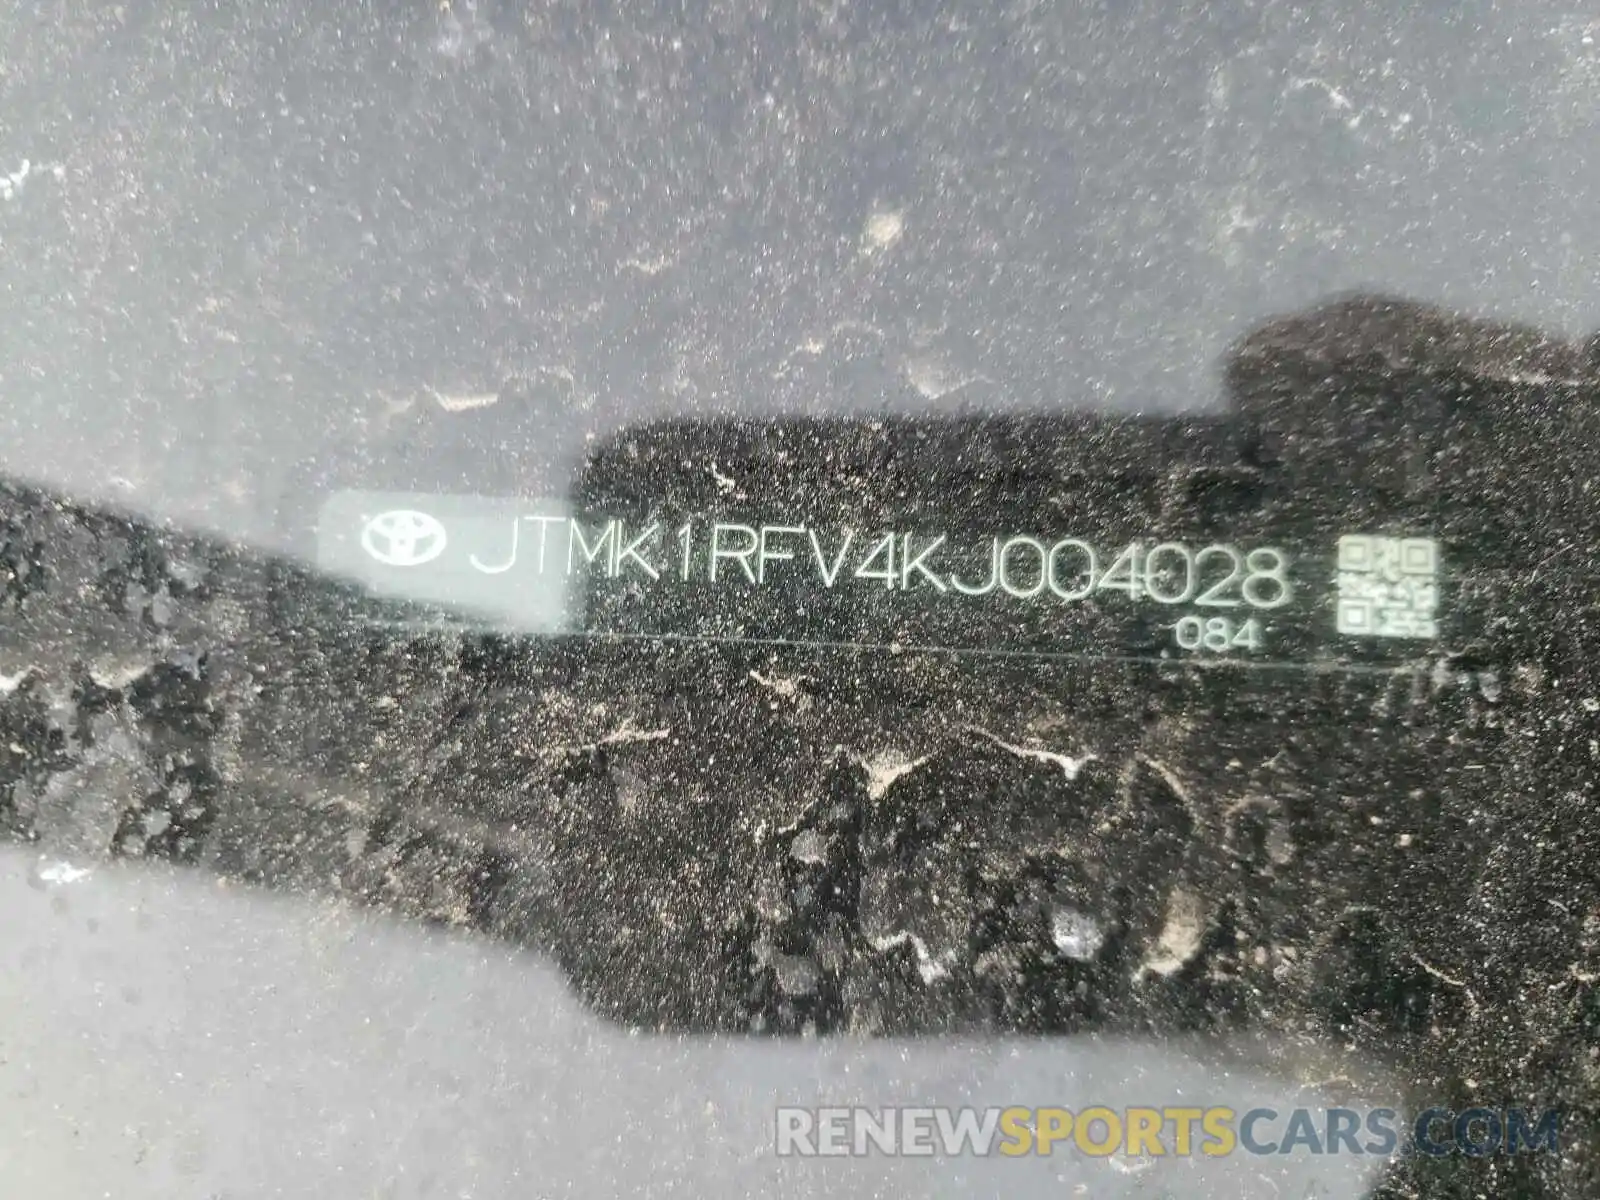 10 Фотография поврежденного автомобиля JTMK1RFV4KJ004028 TOYOTA RAV4 2019